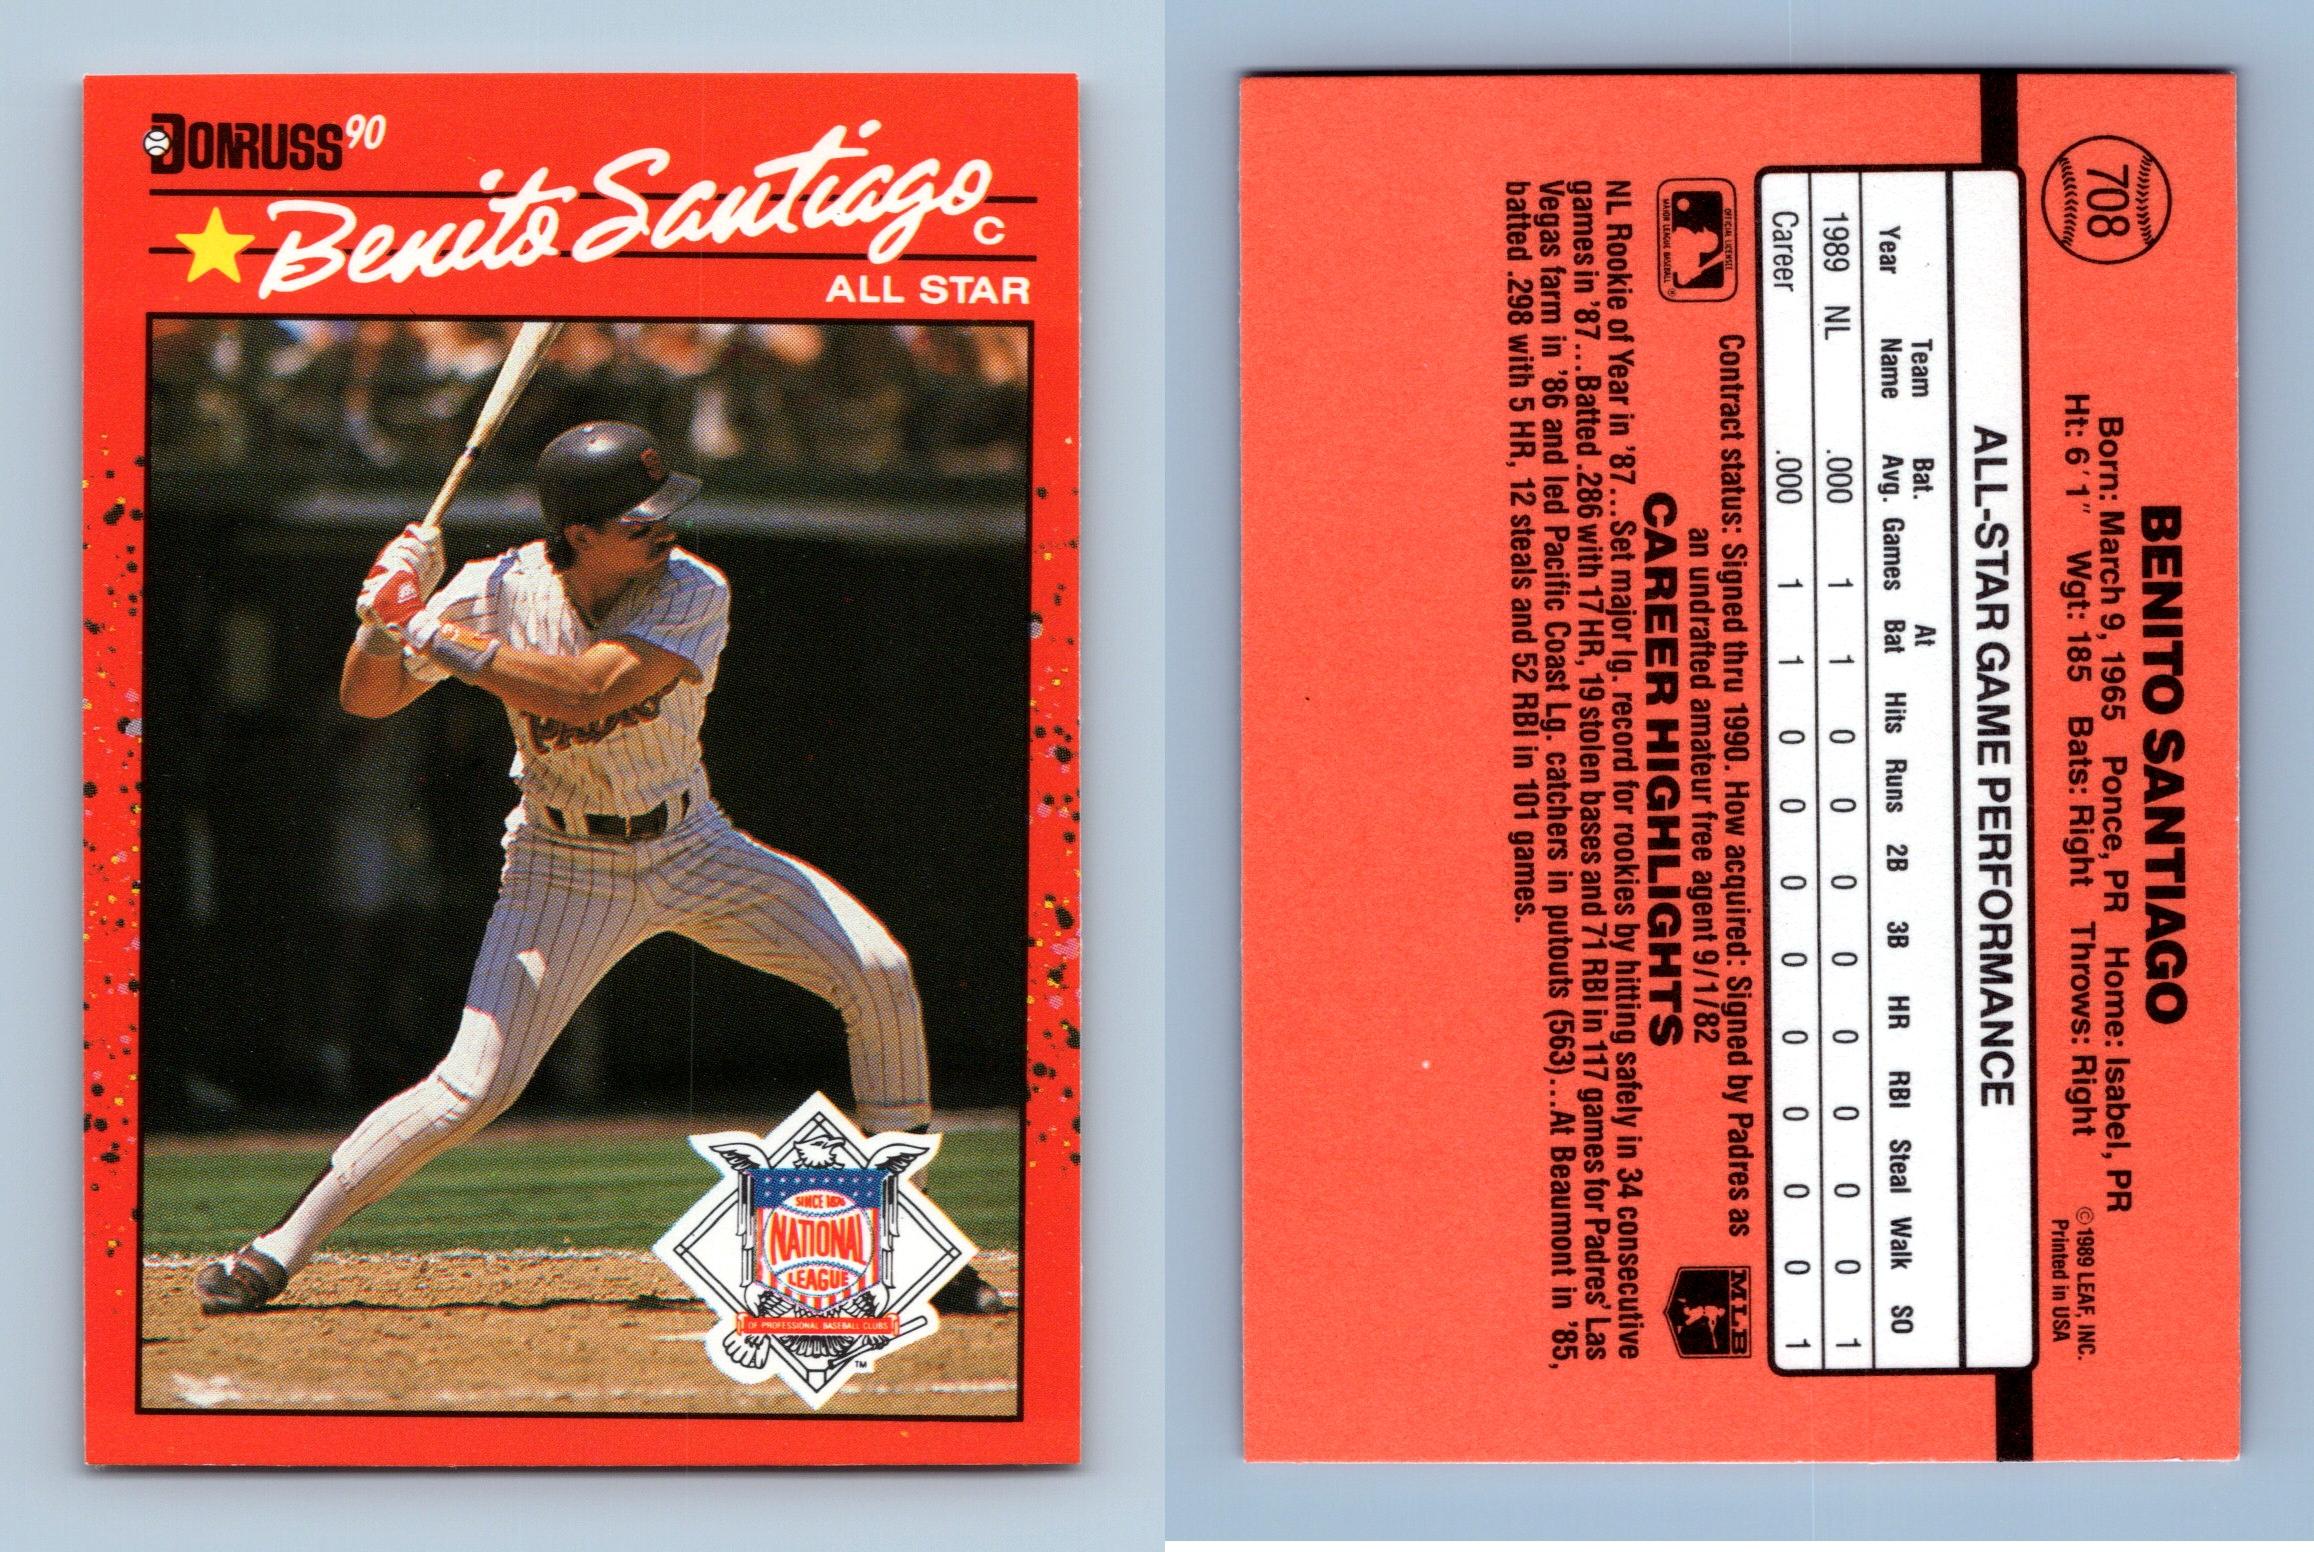 Benito Santiago - All Star #708 Donruss 1990 Baseball Trading Card